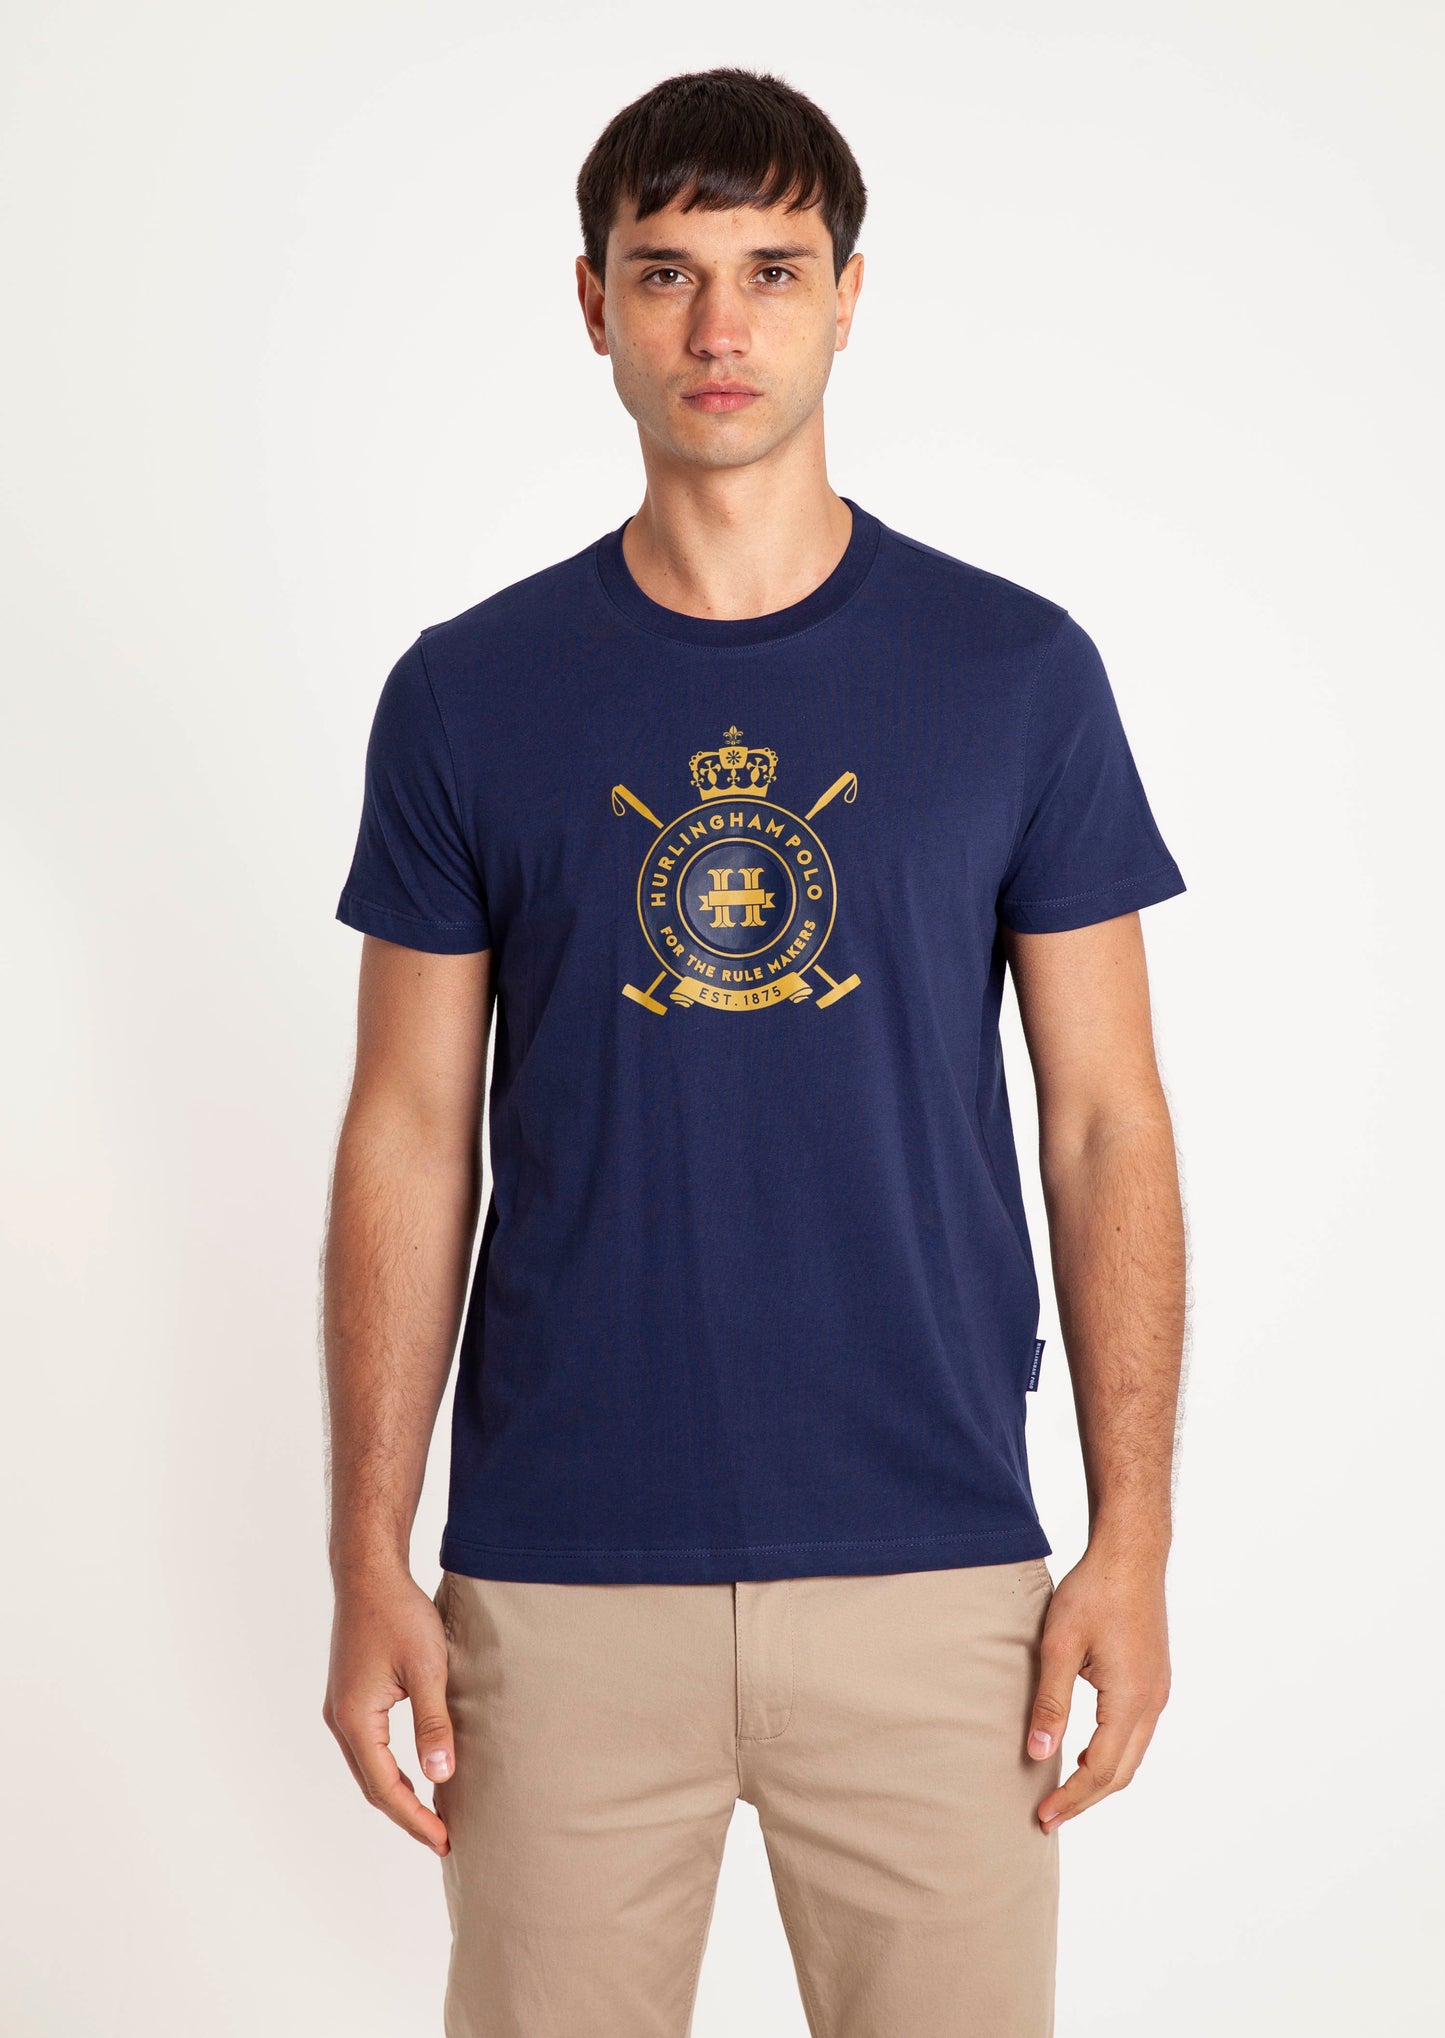 Emblem Graphic T shirt - Royal